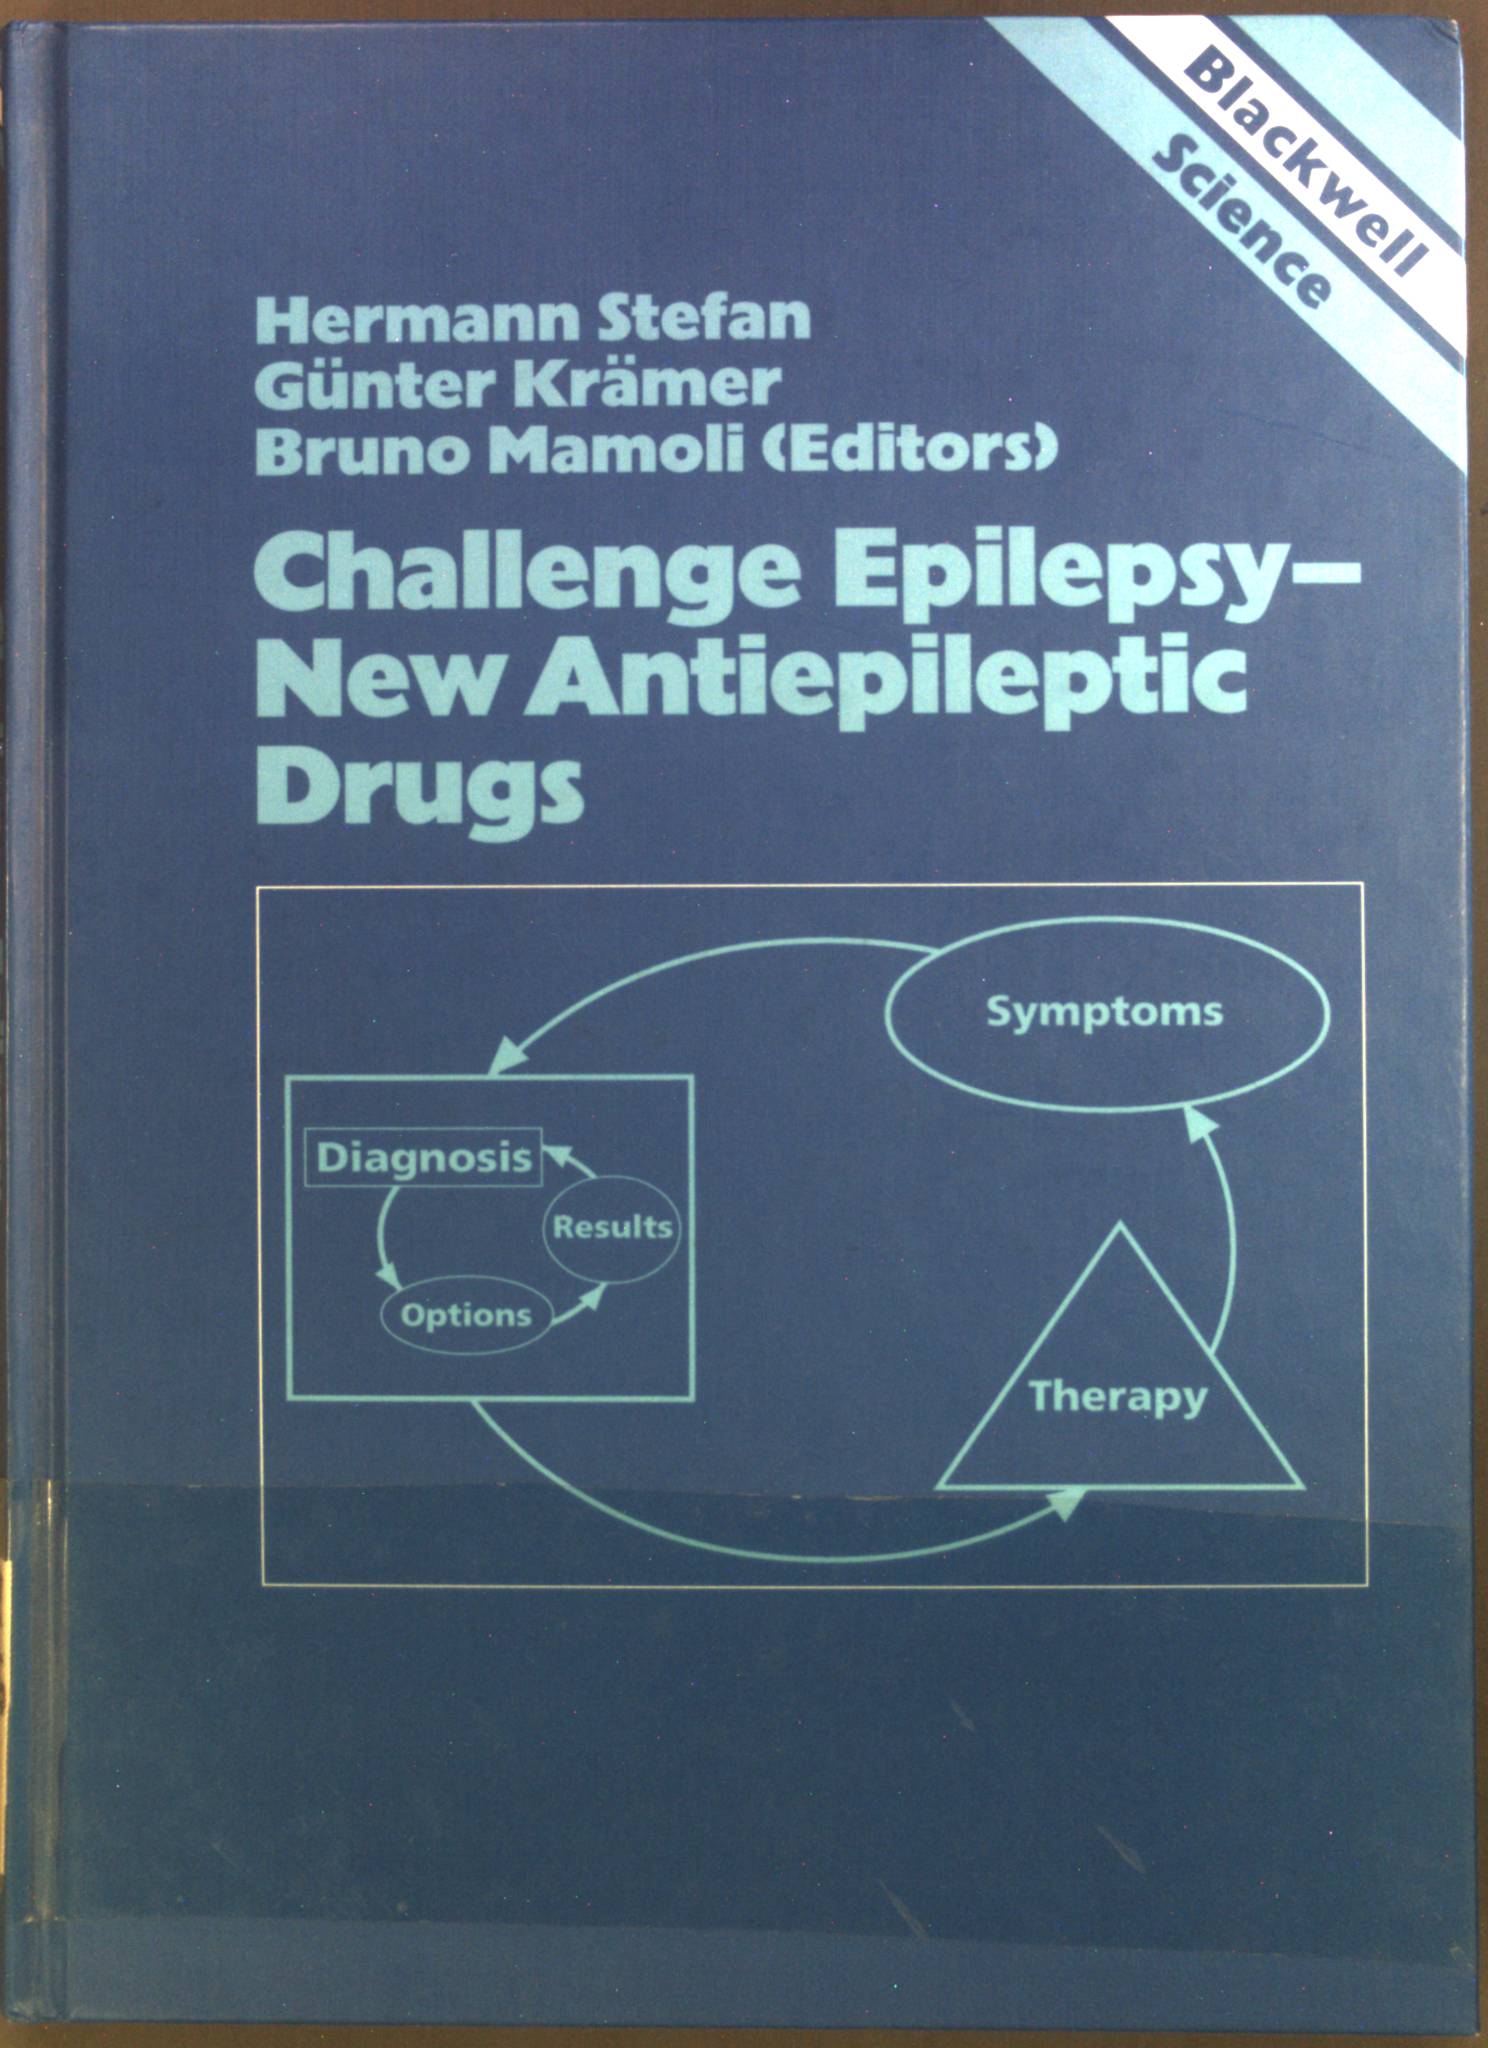 Challenge epilepsy - new antiepileptic drugs - Stefan, Hermann, Günter Krämer and Bruno Mamoli